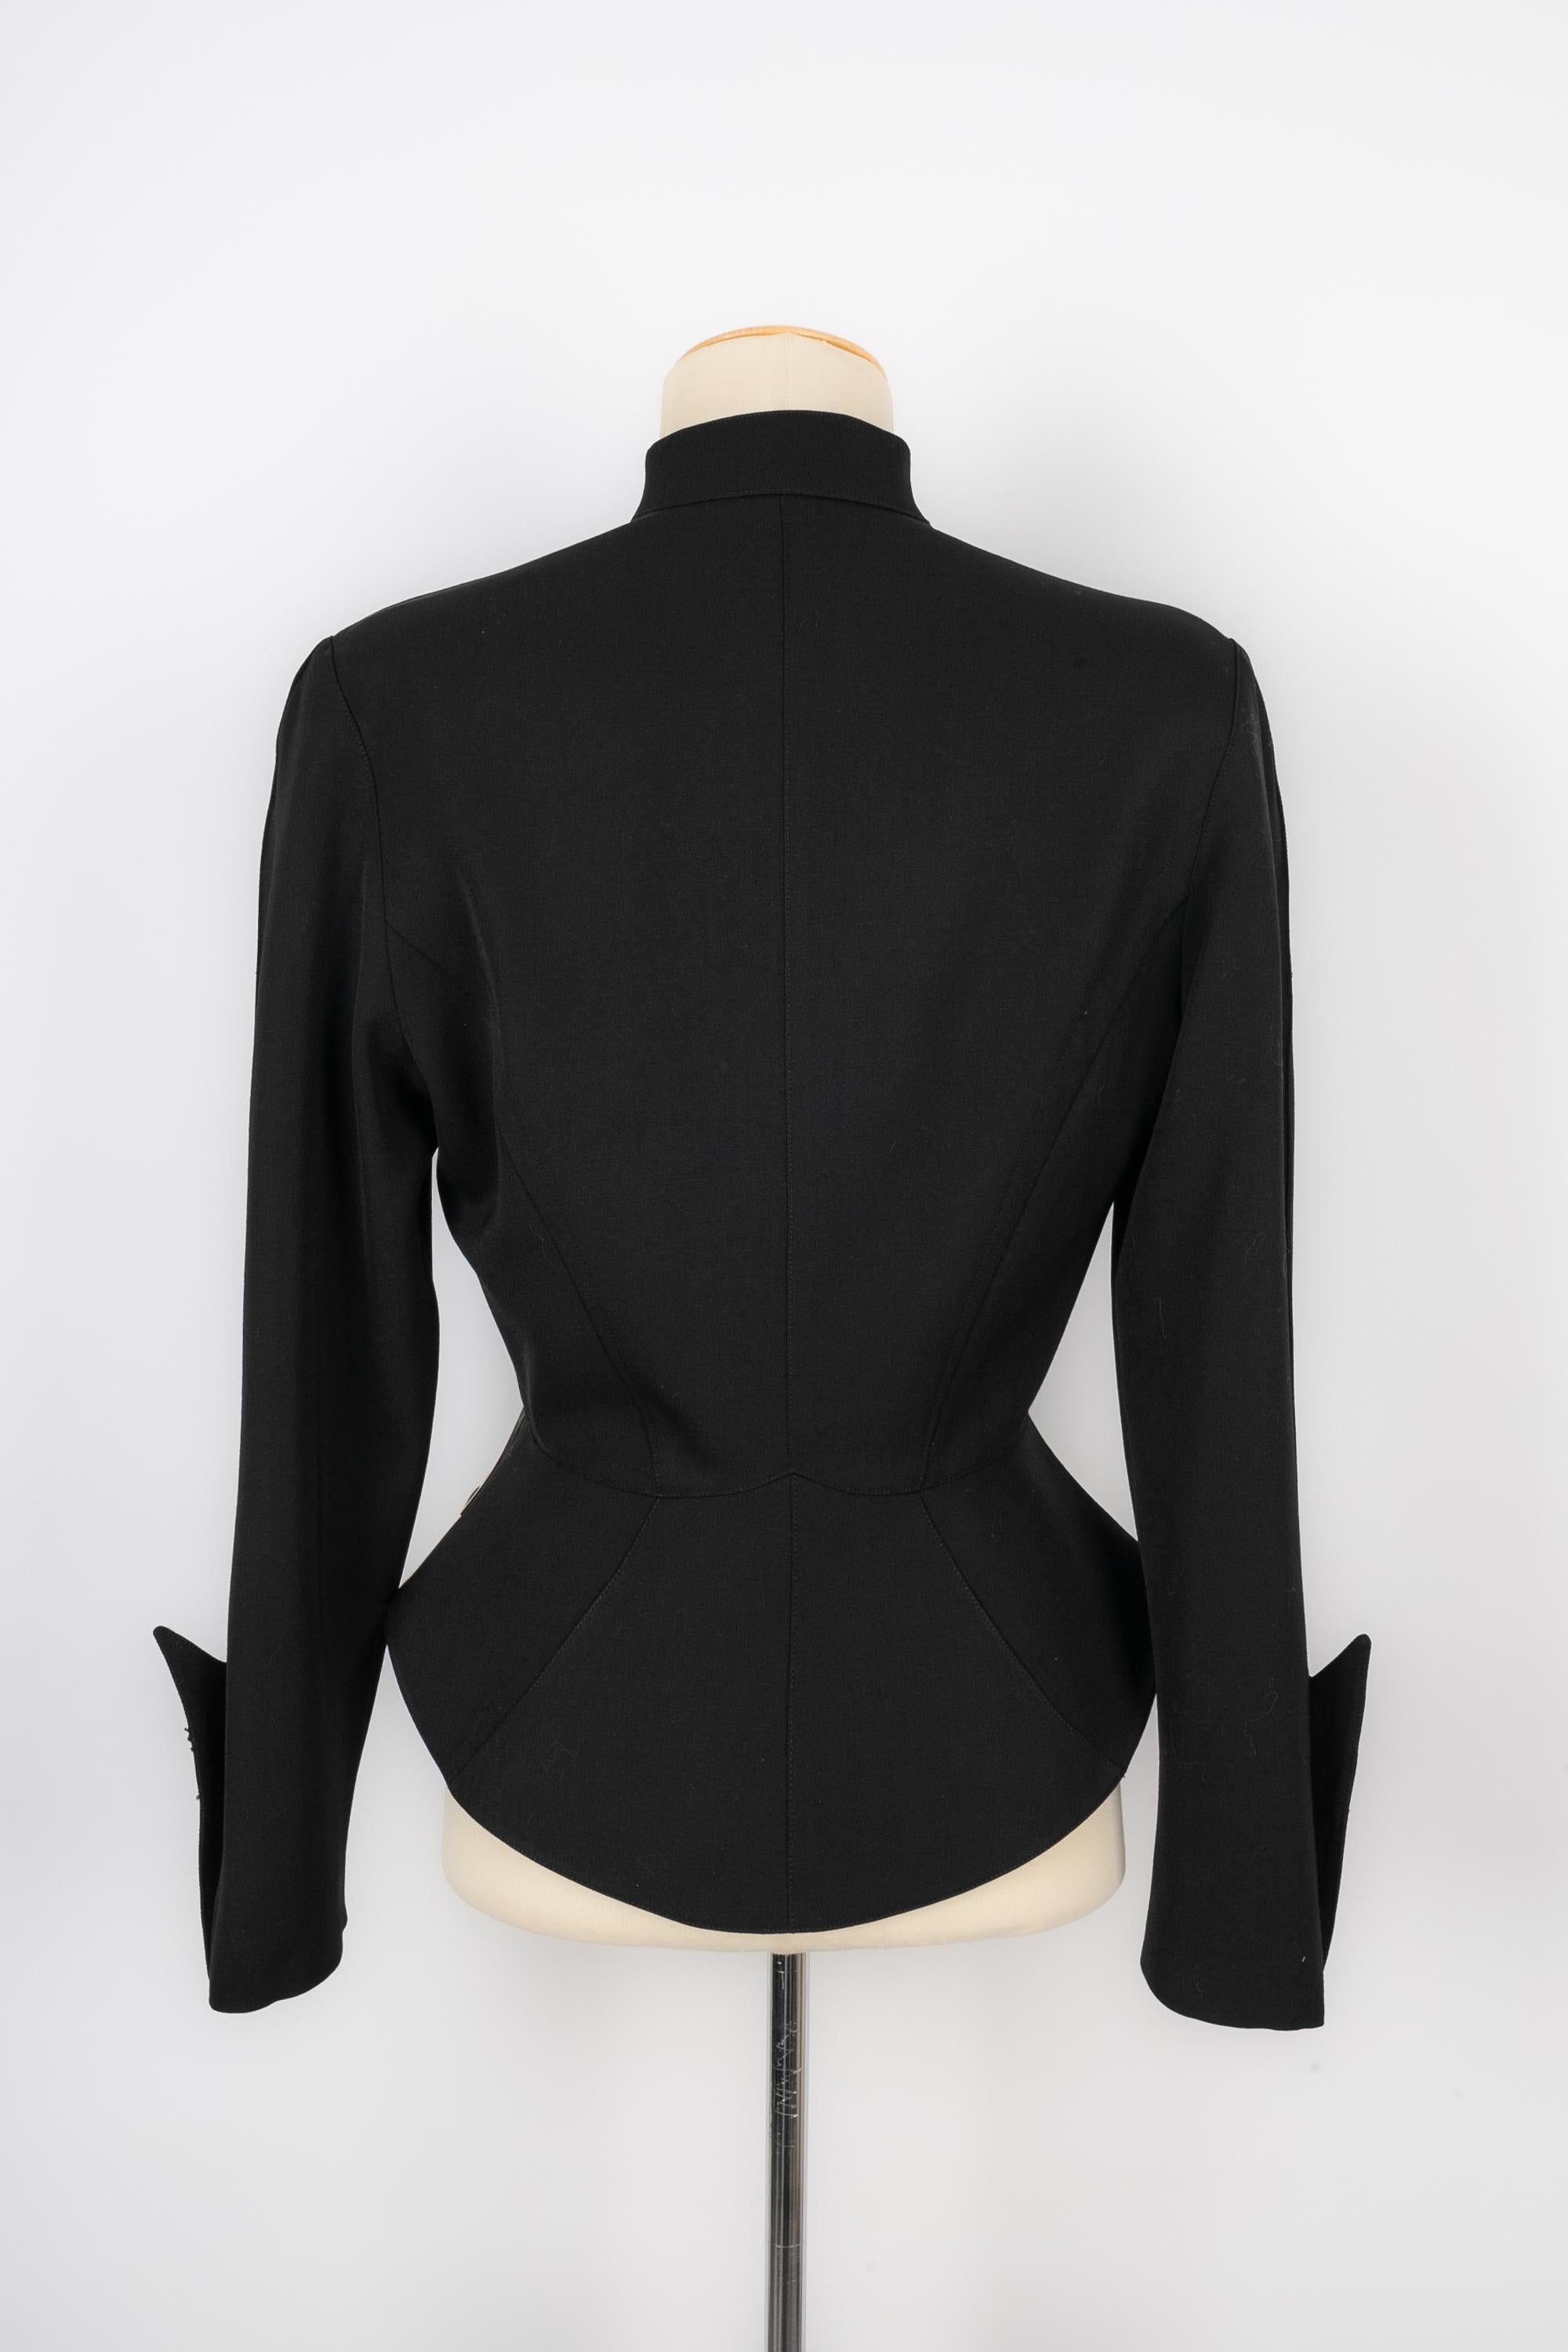 Thierry Mugler jacket In Excellent Condition For Sale In SAINT-OUEN-SUR-SEINE, FR